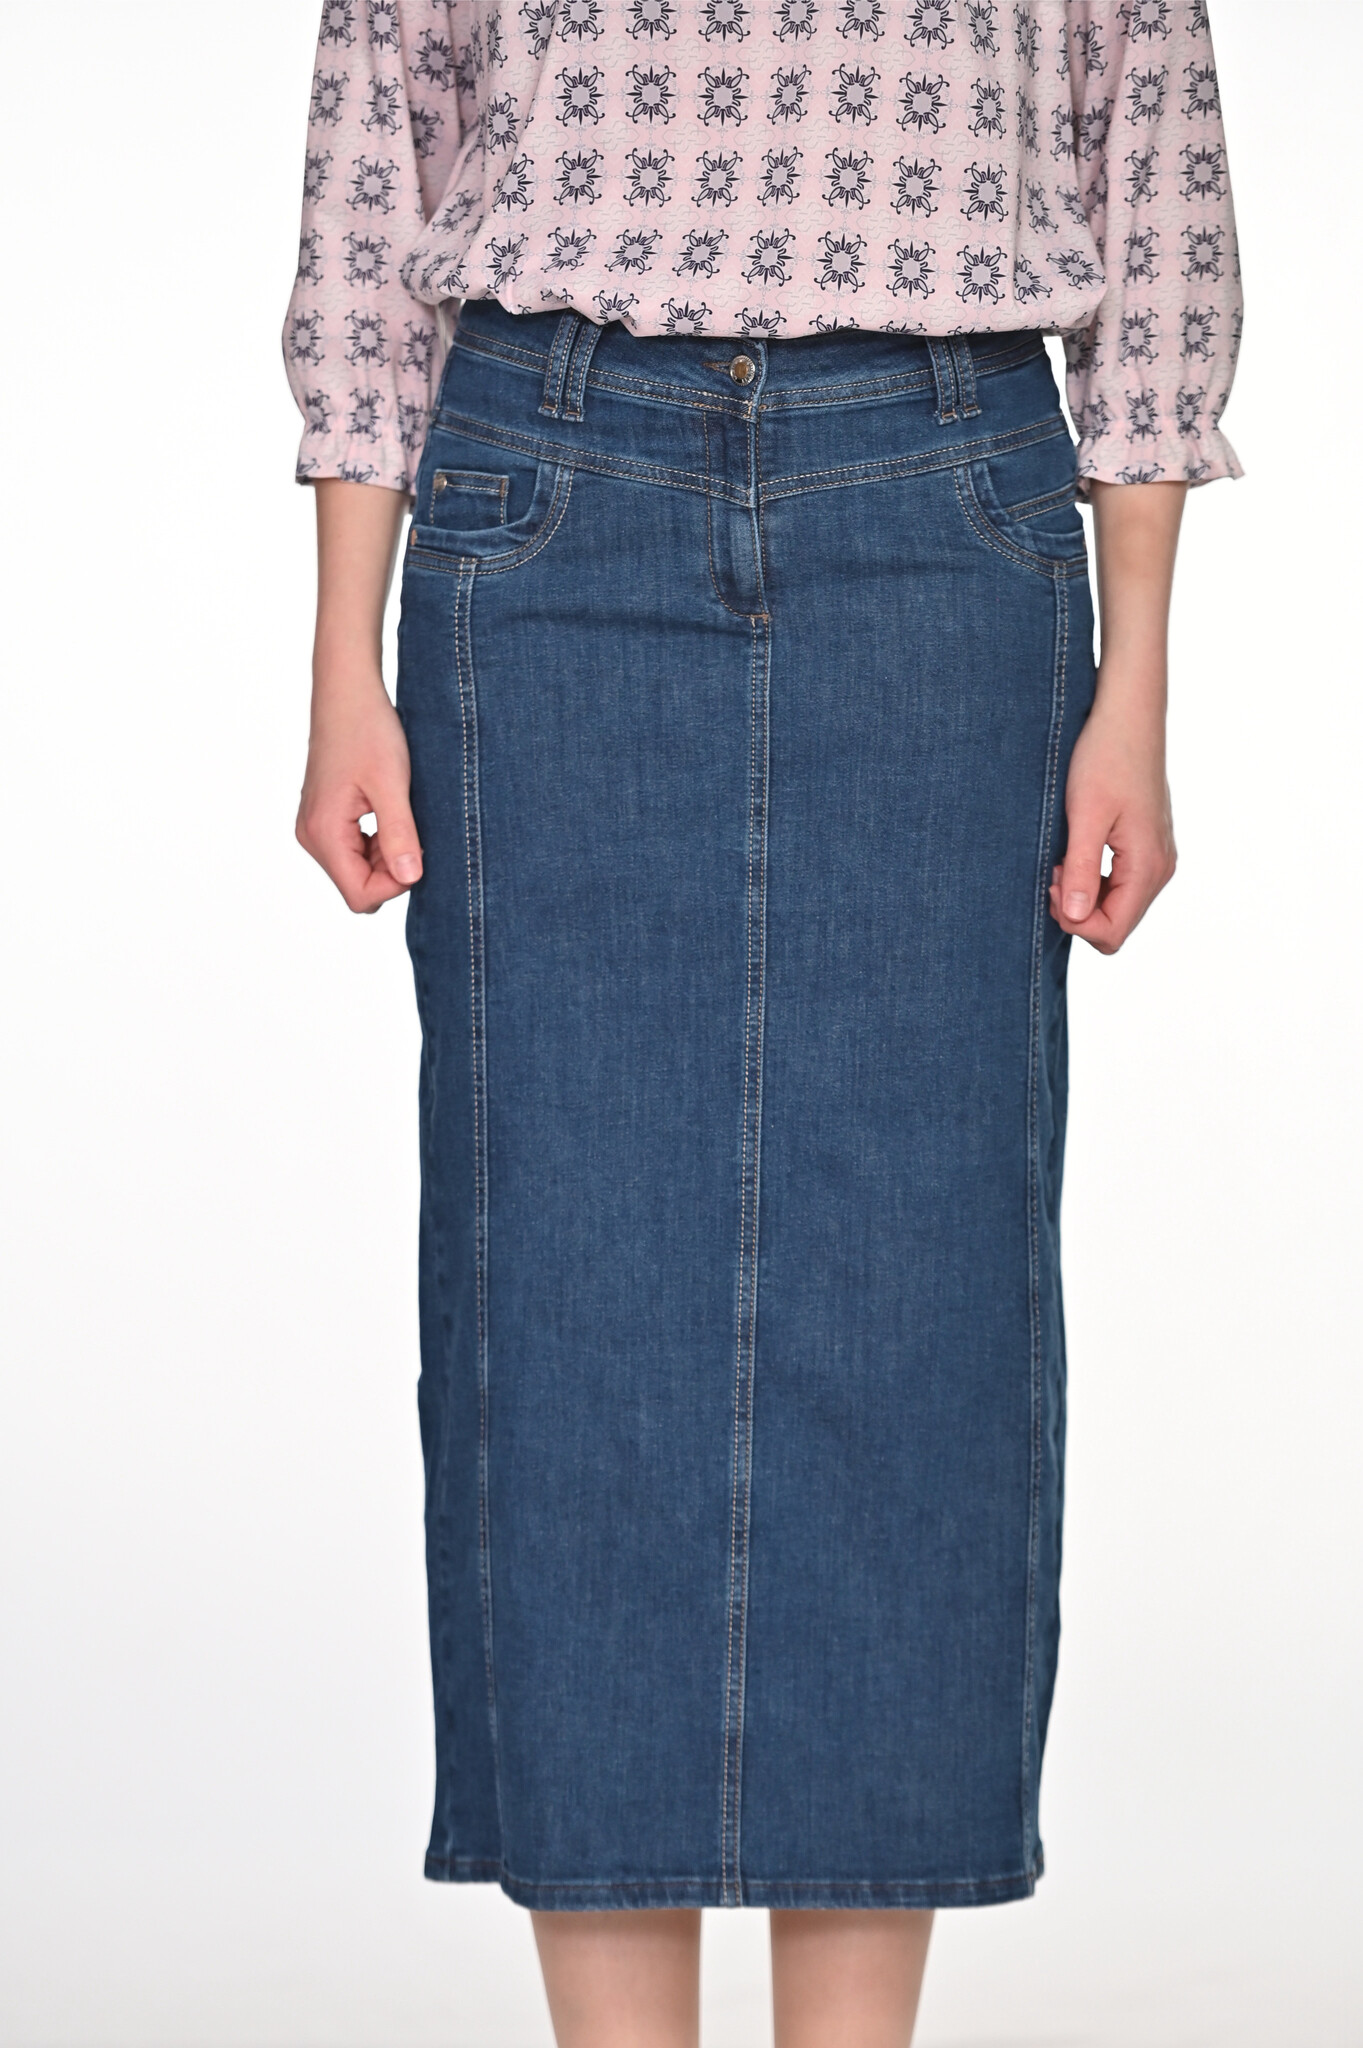 EXELIT DOO ELIT Freizeitrock IRINA, jeans, 87 cm